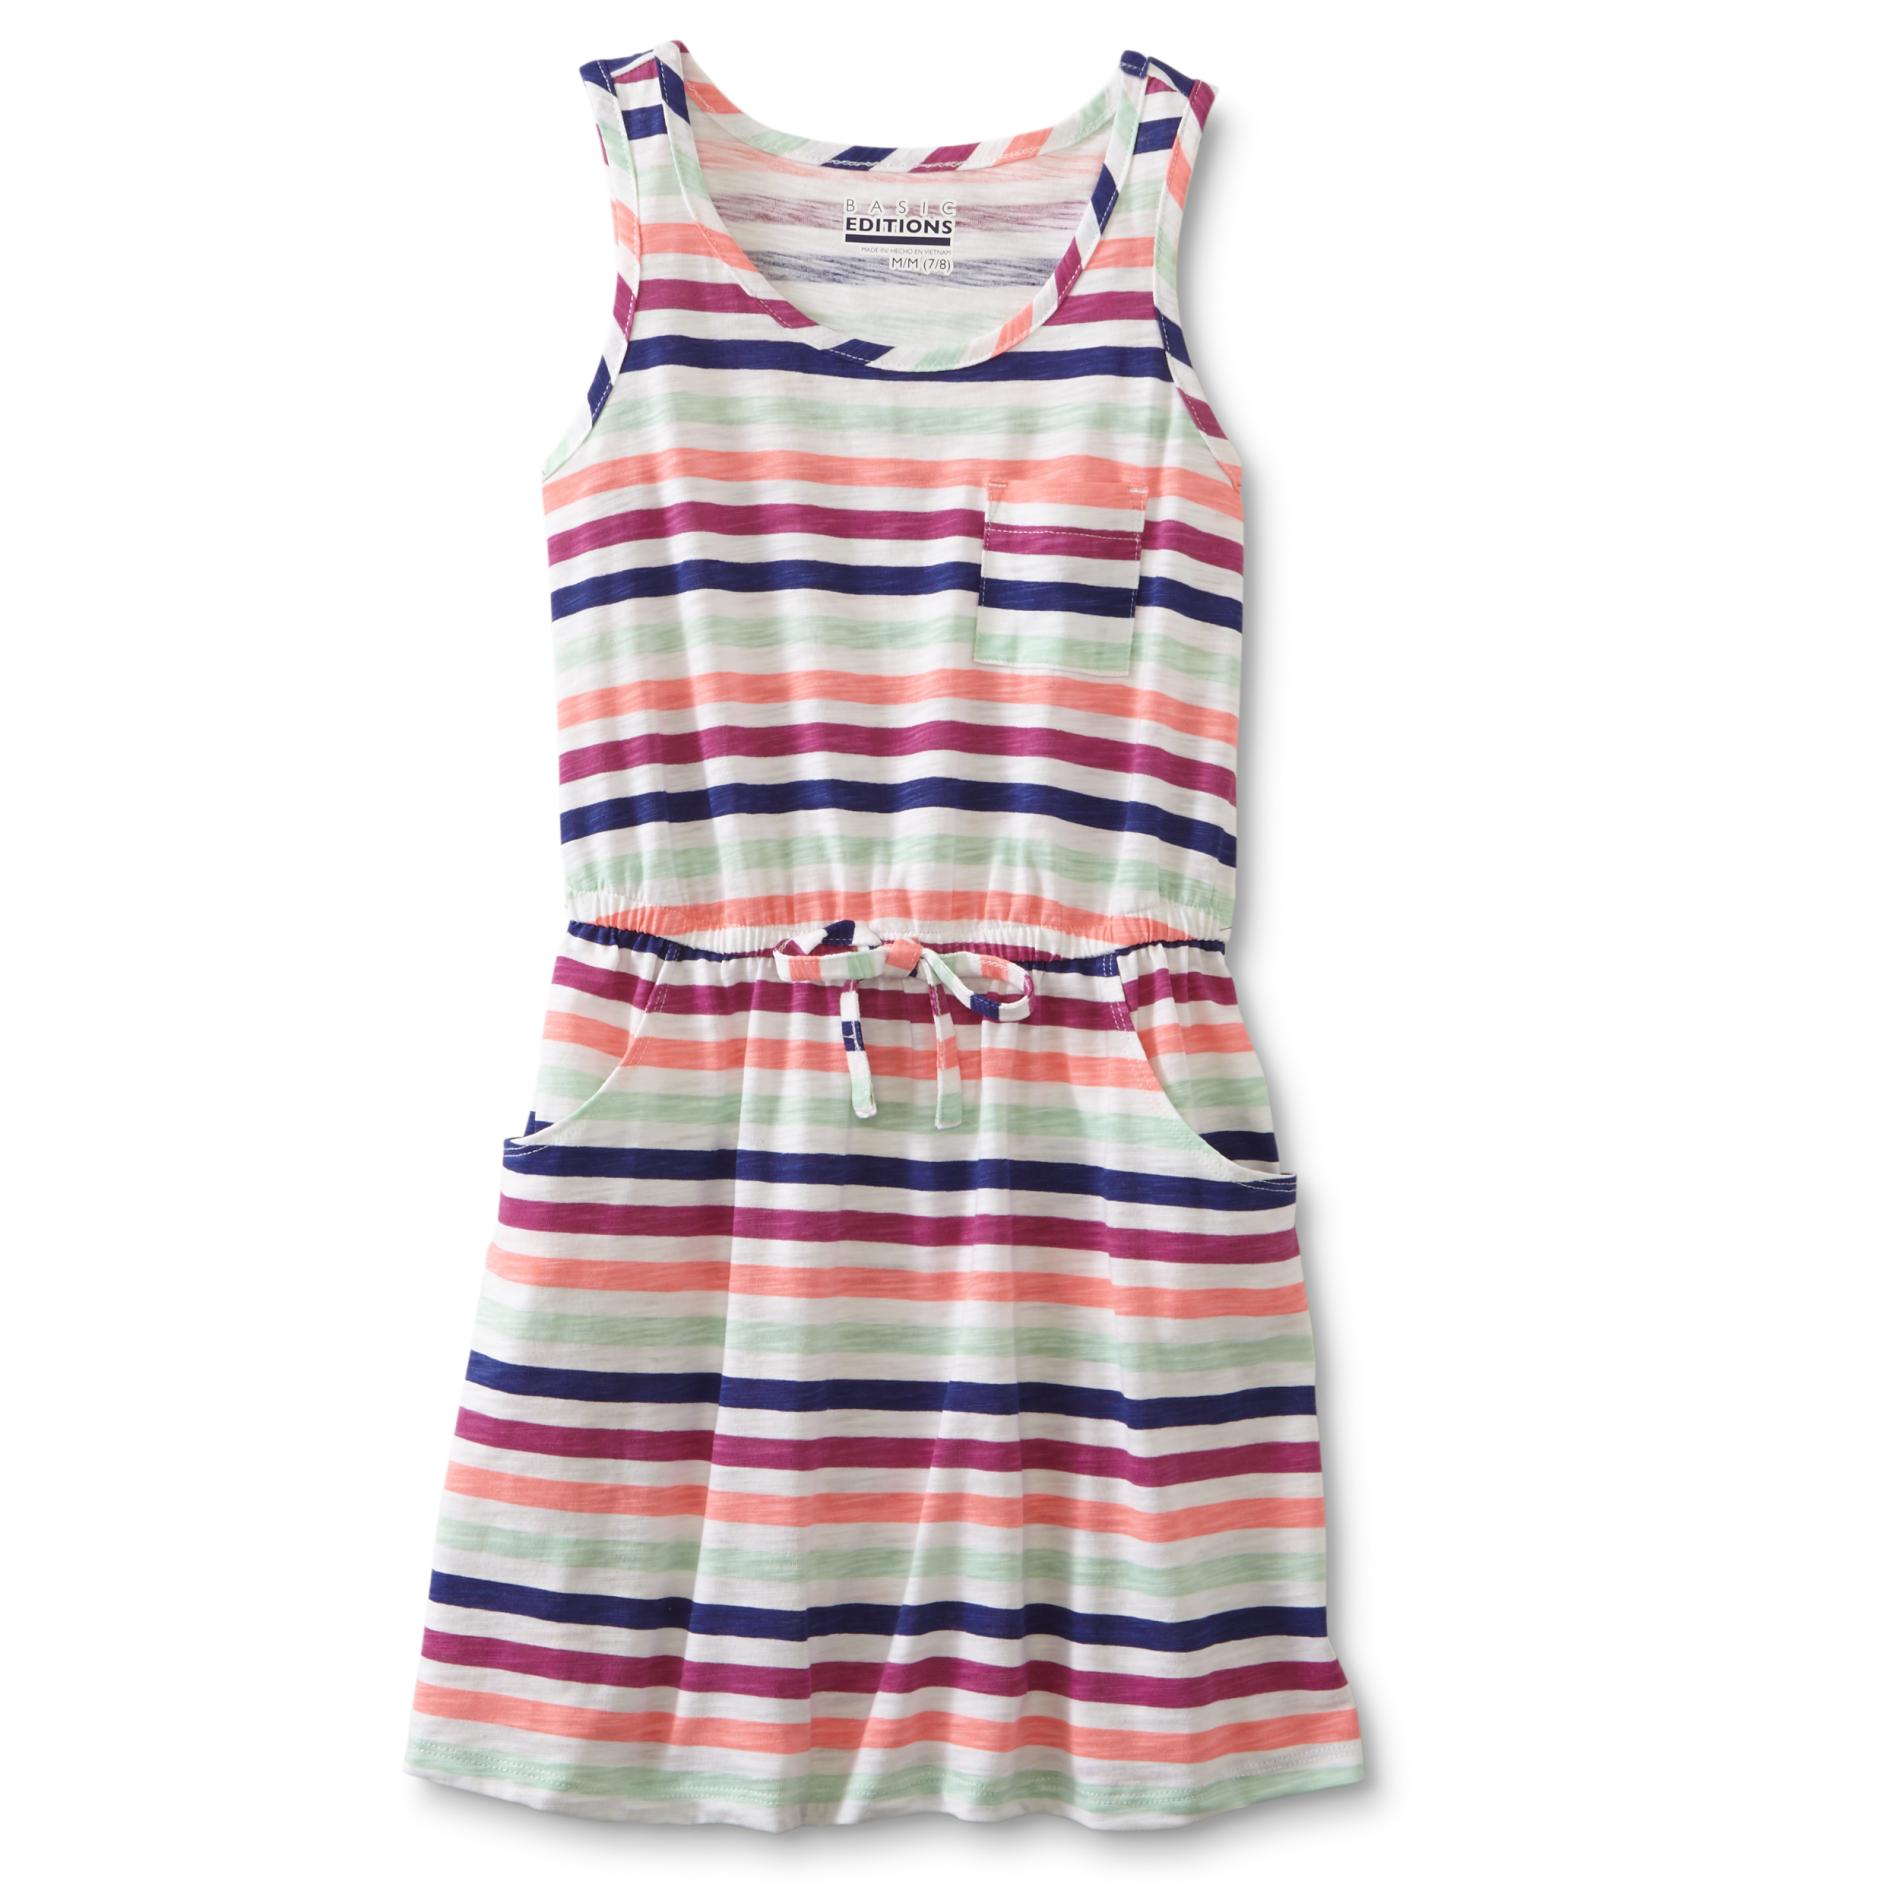 Basic Editions Girls' Sleeveless Dress - Striped